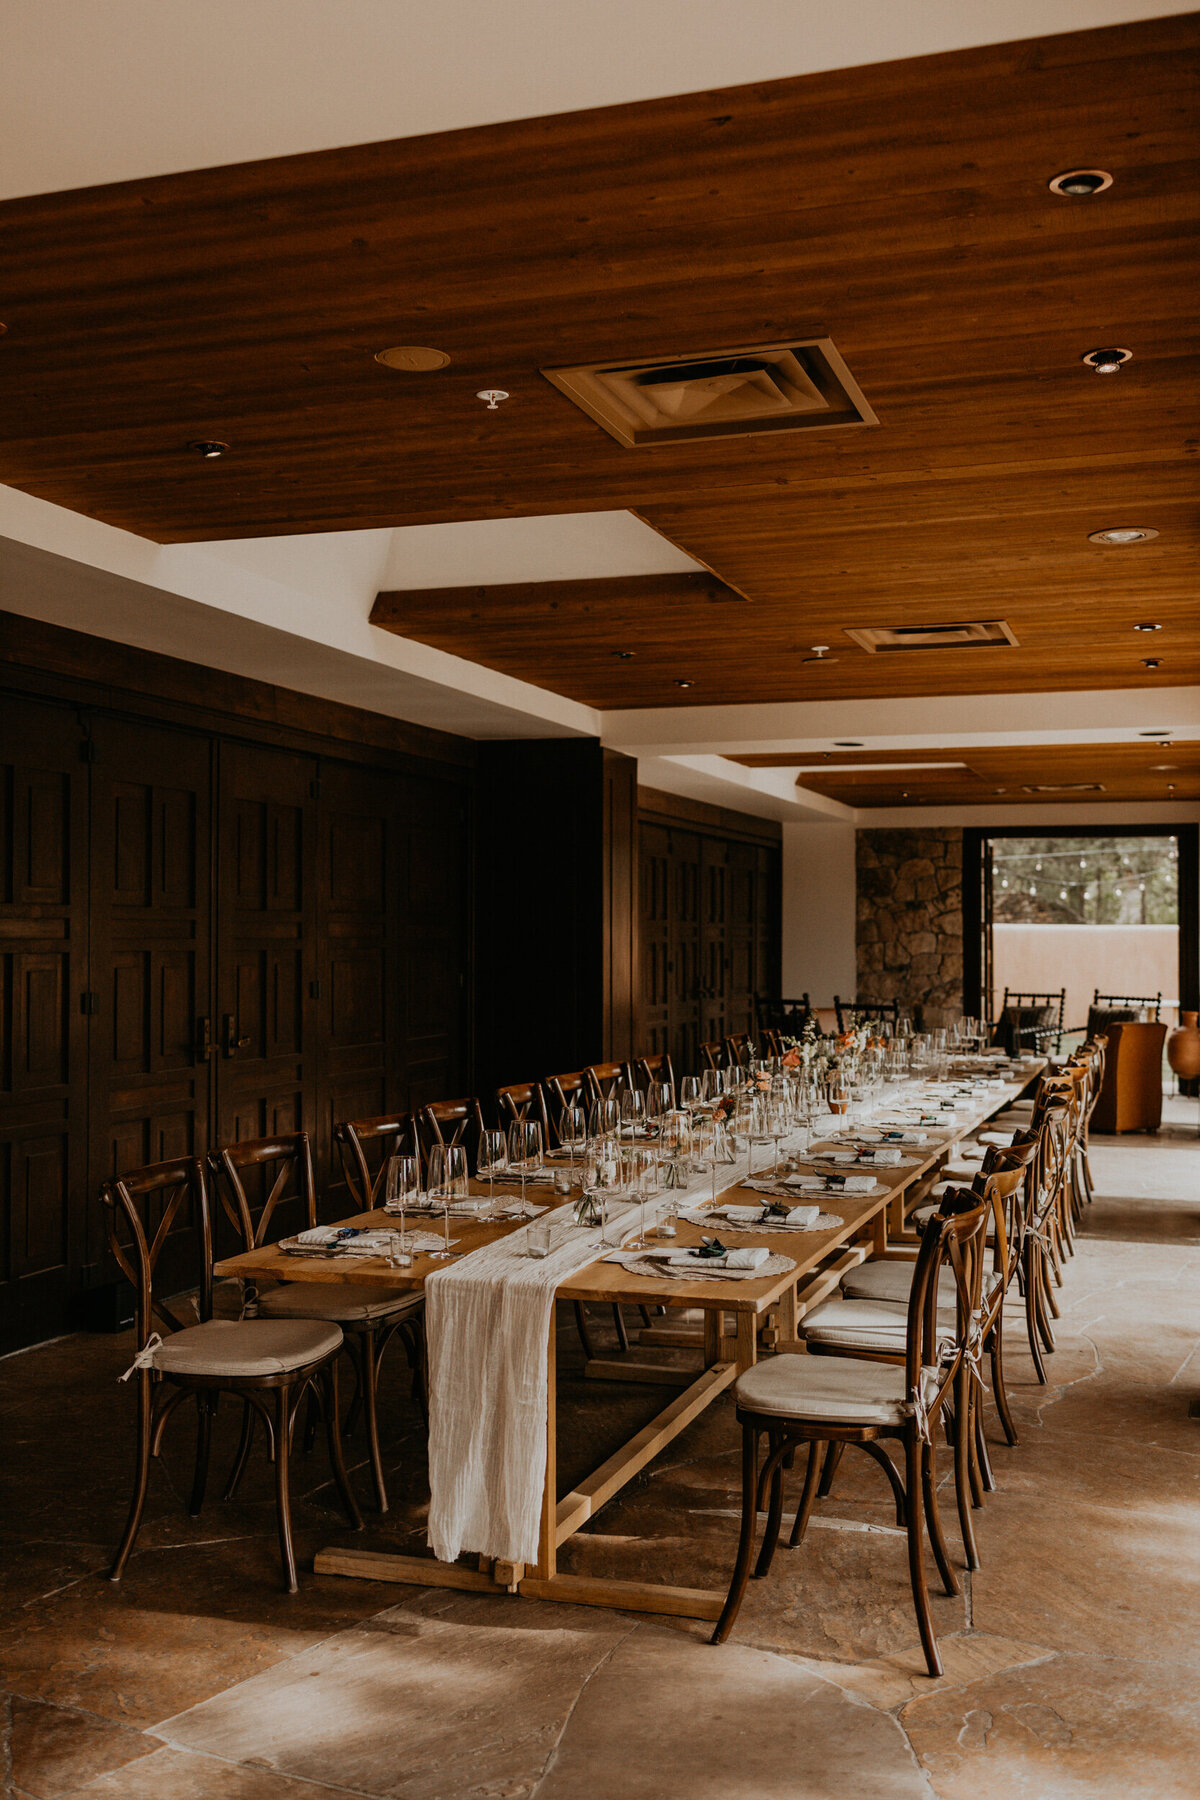 wedding reception table setup at Bishop's Lodge in Santa Fe